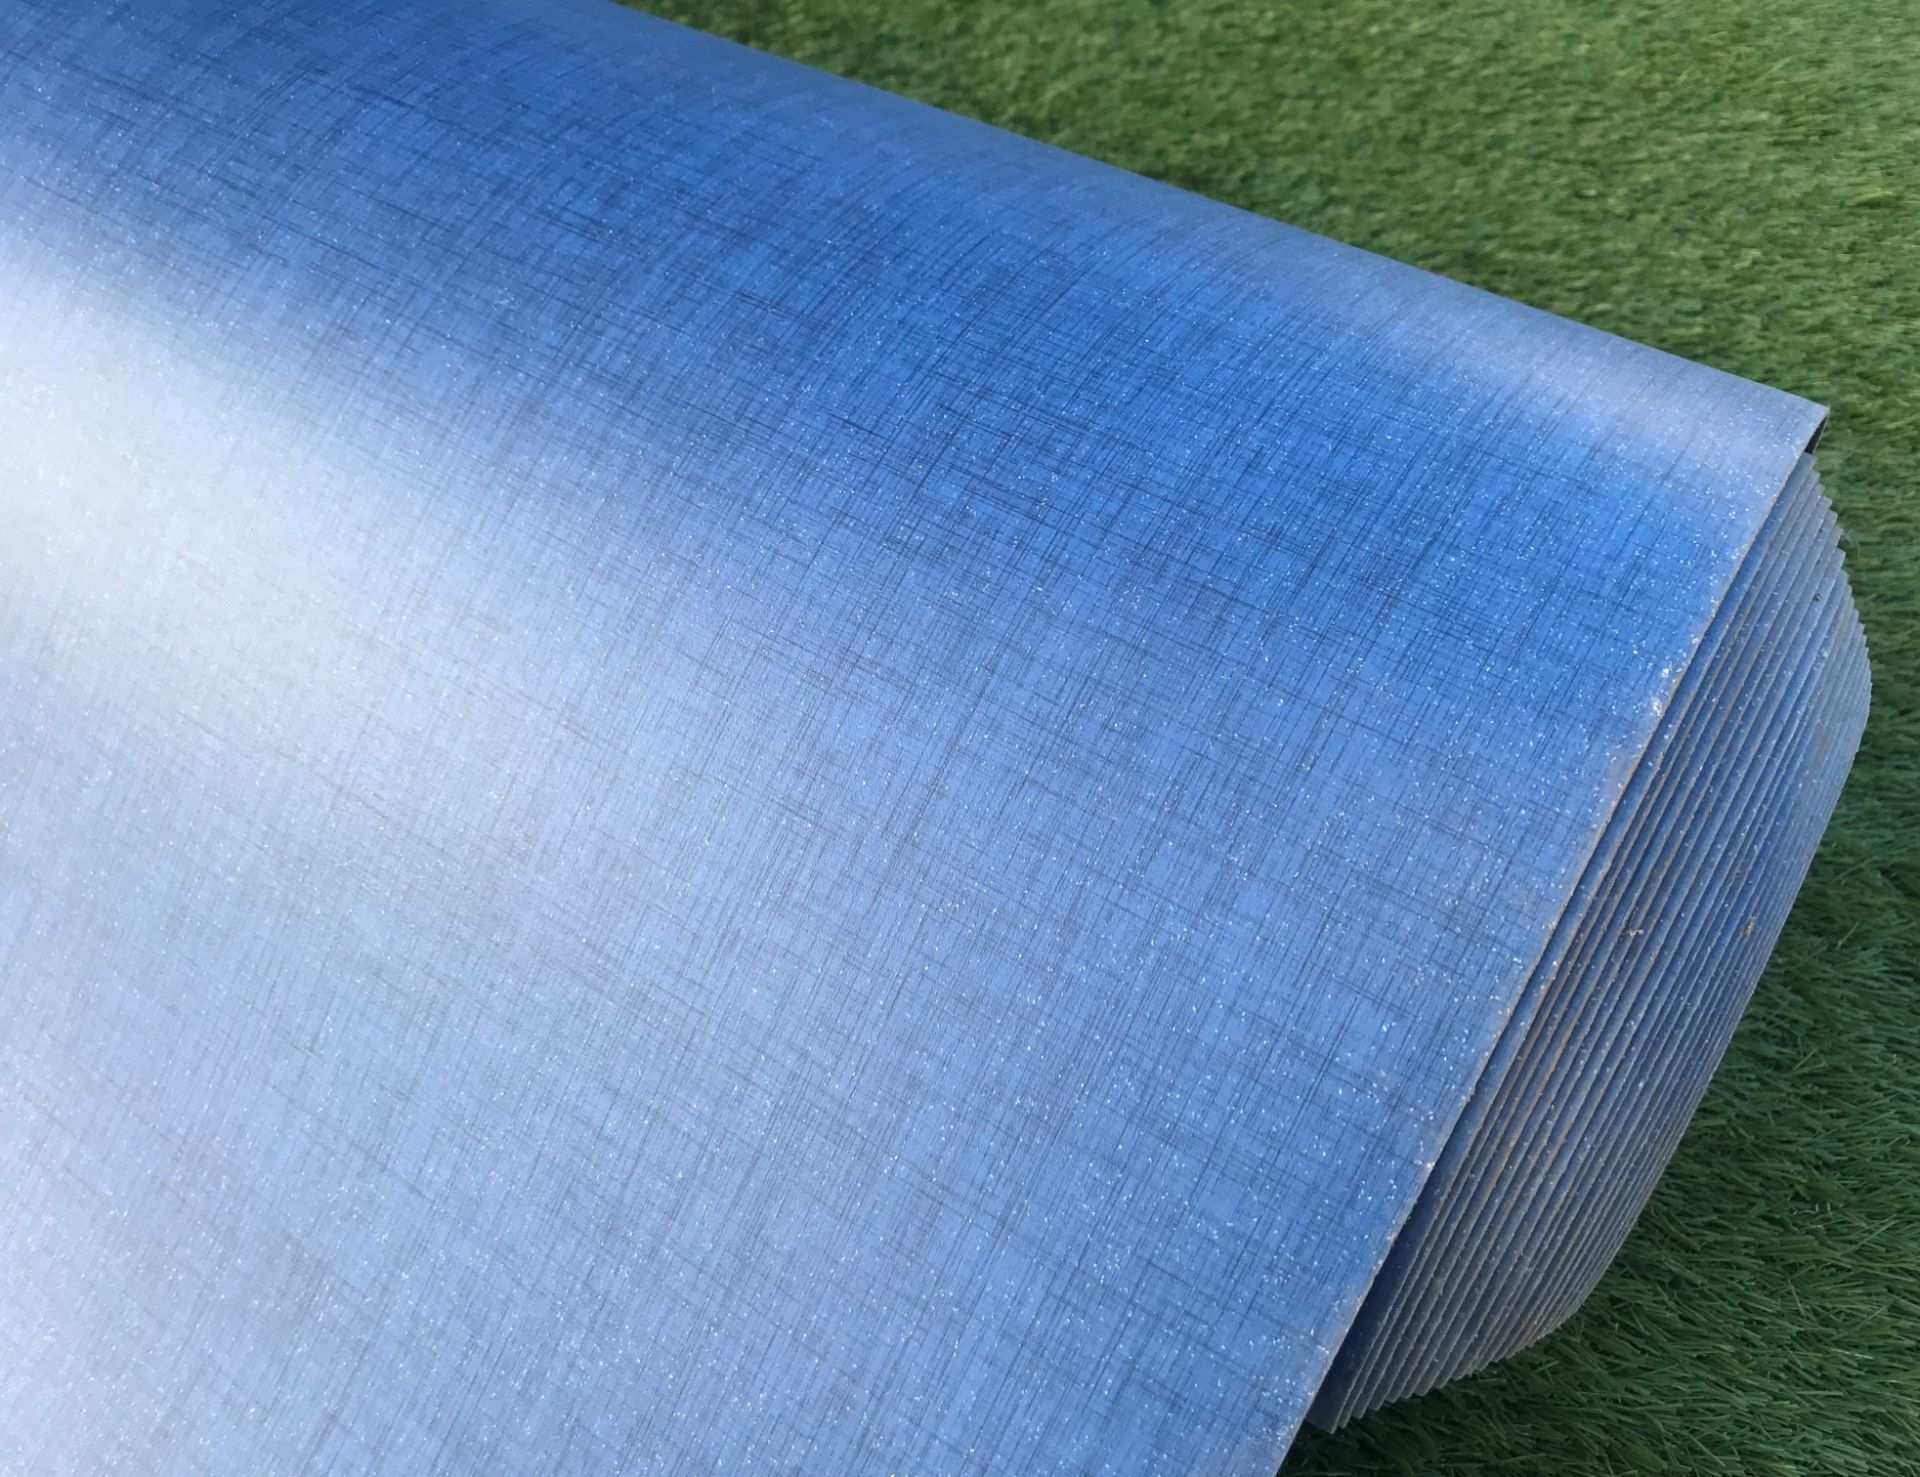 1 x GERFLOR Tarkett Commercial Grade Safety Flooring In Dark Blue - 16X2M Roll - Ref: NWF004 - CL912 - Bild 2 aus 4